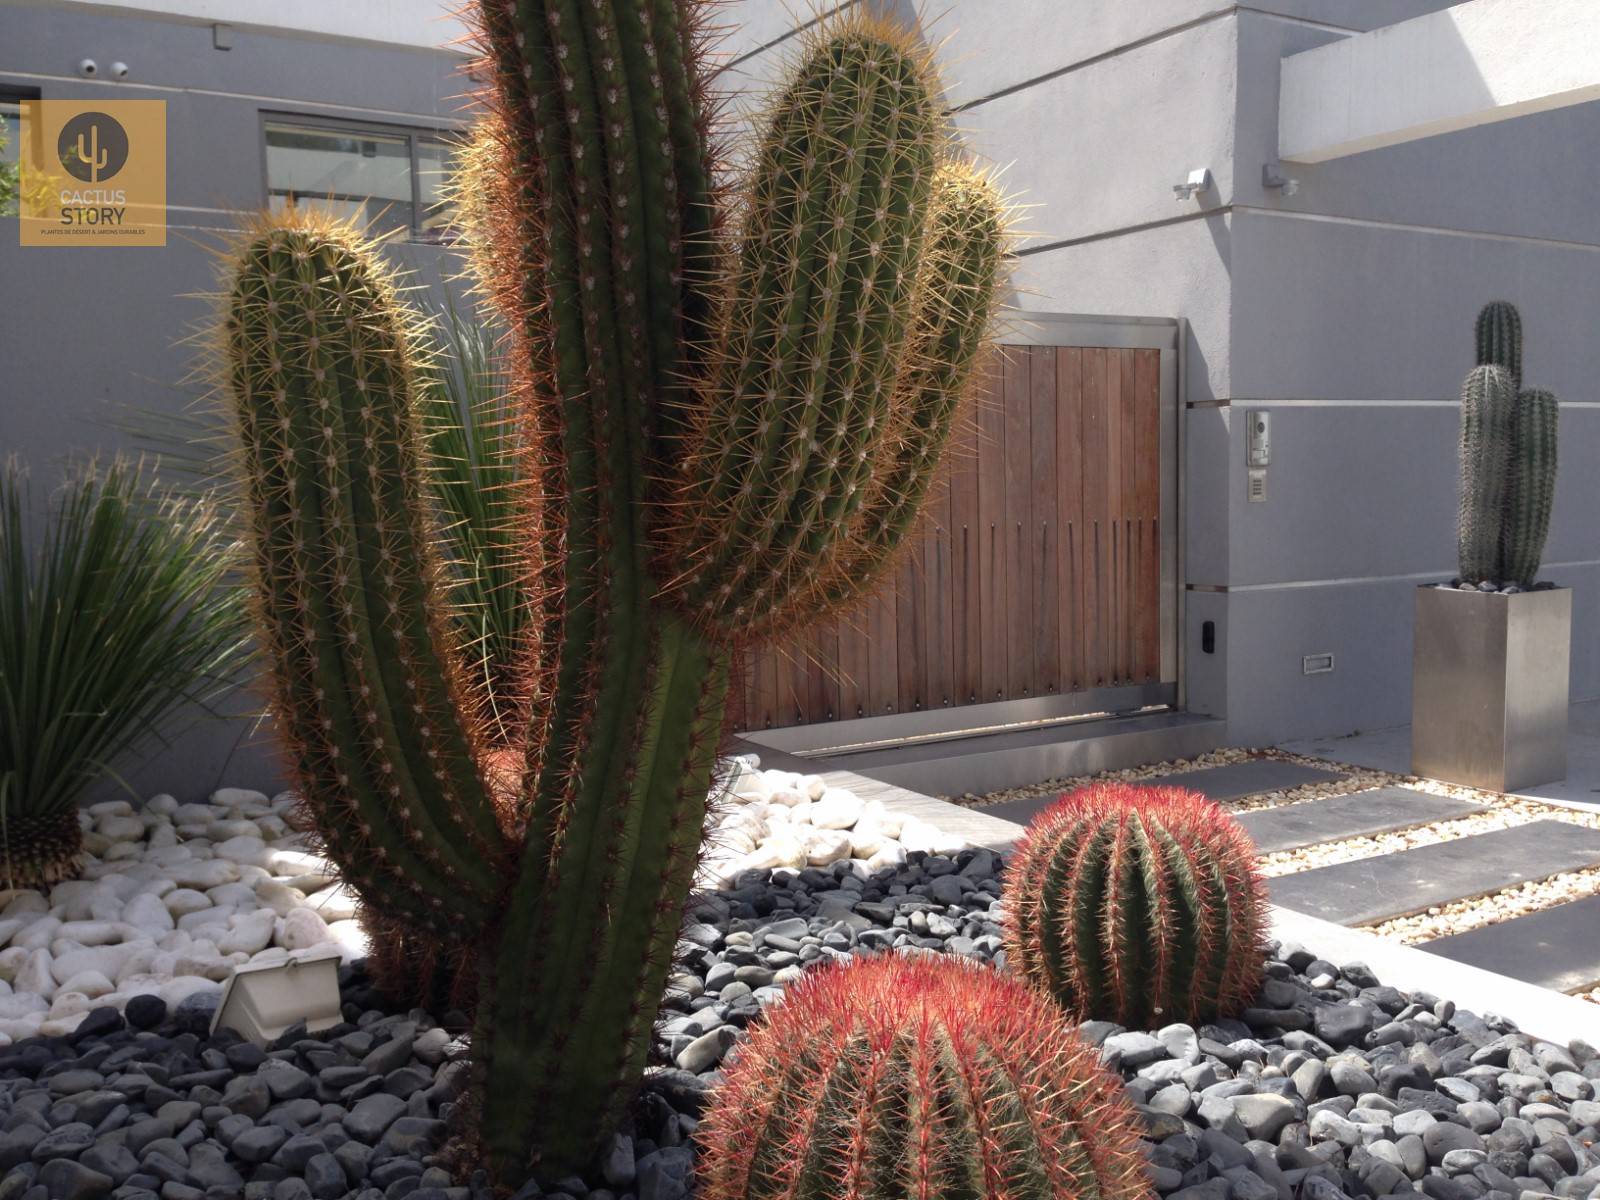 cactus story creation Aix en Provencevence